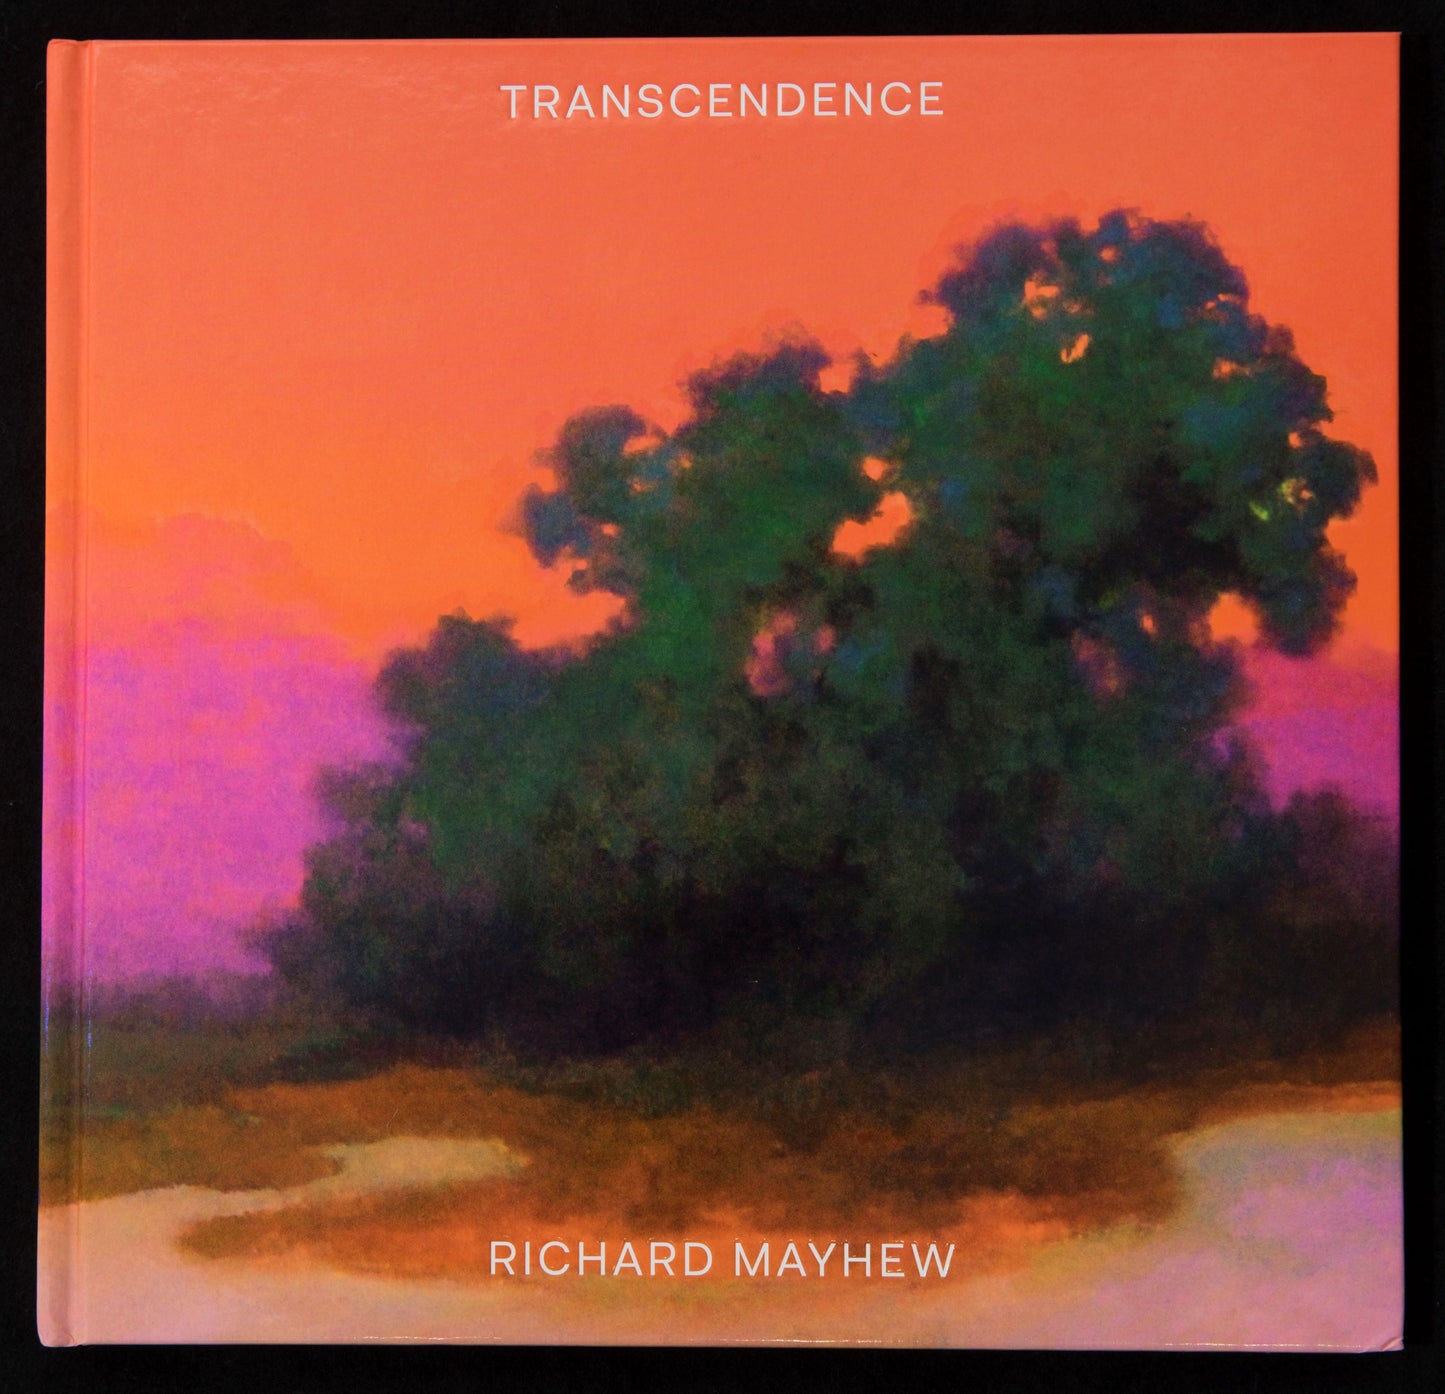 Richard Mayhew: Transcendence